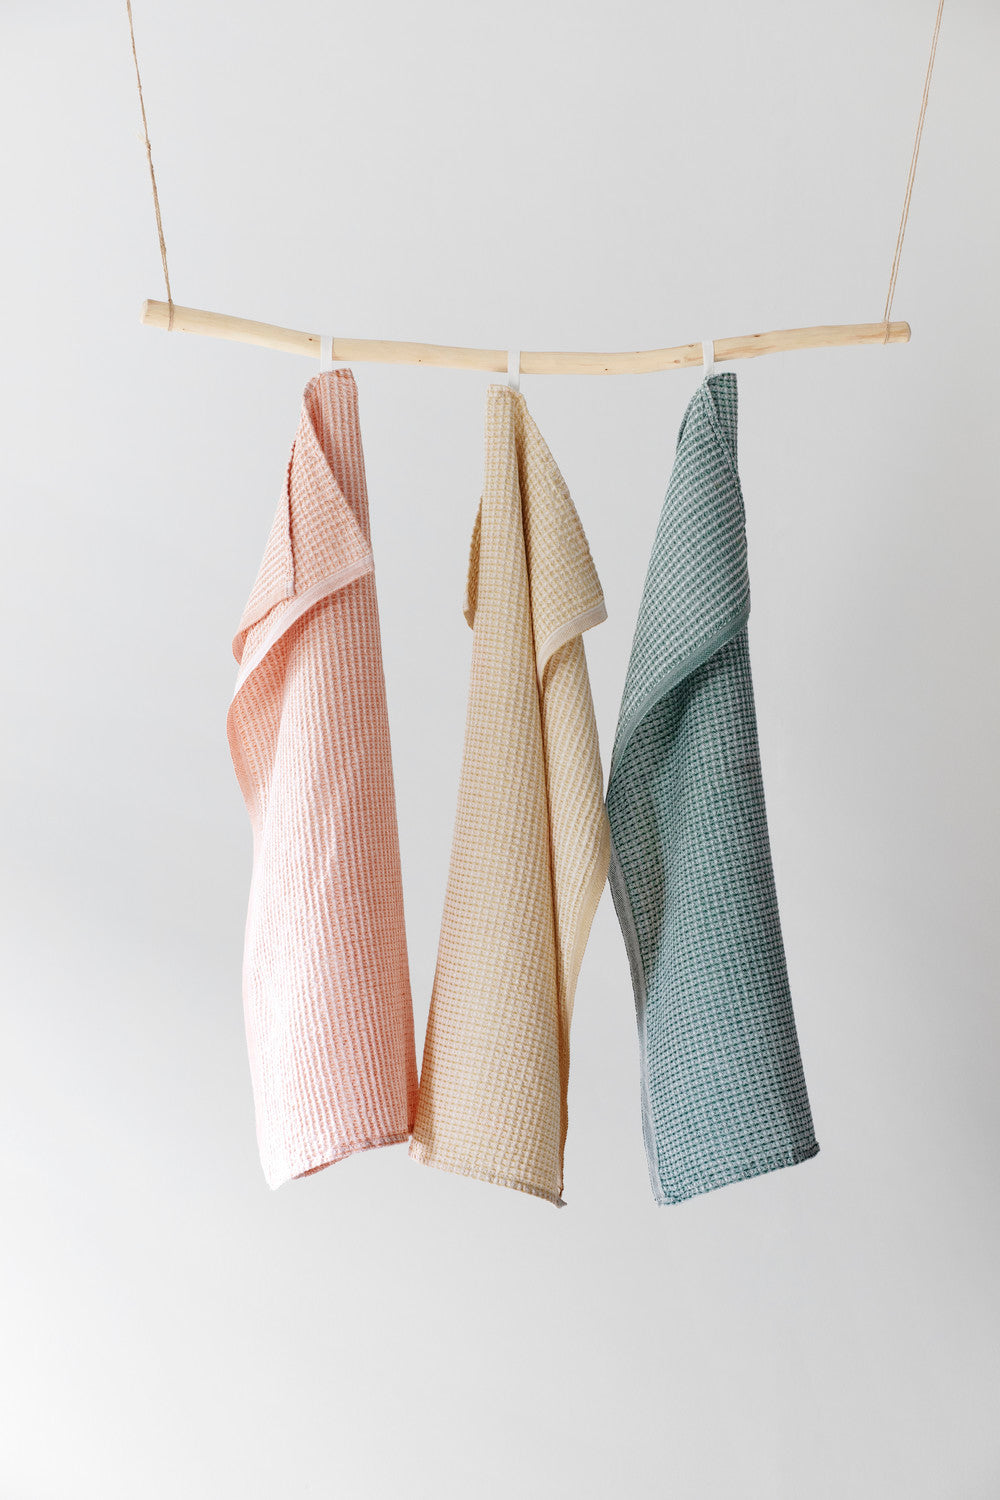 MAIJA towel 48x70cm 54/white-olive washed linen-tencel-cotton